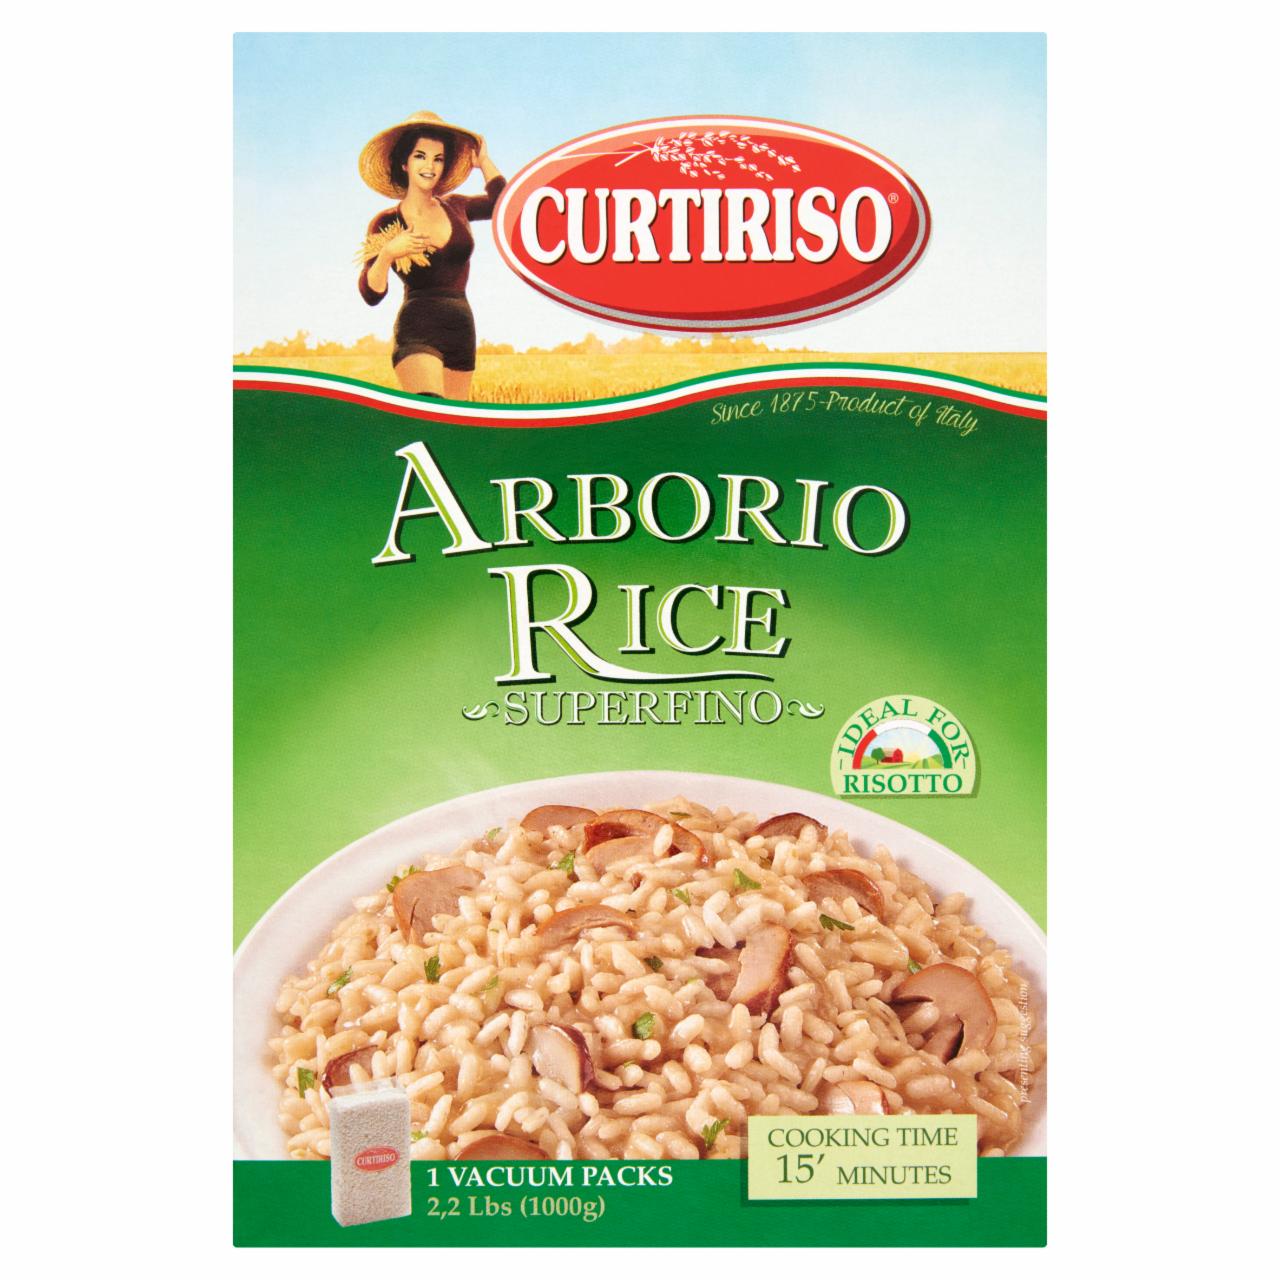 Képek - Curtiriso olasz arborio rizs 1000 g